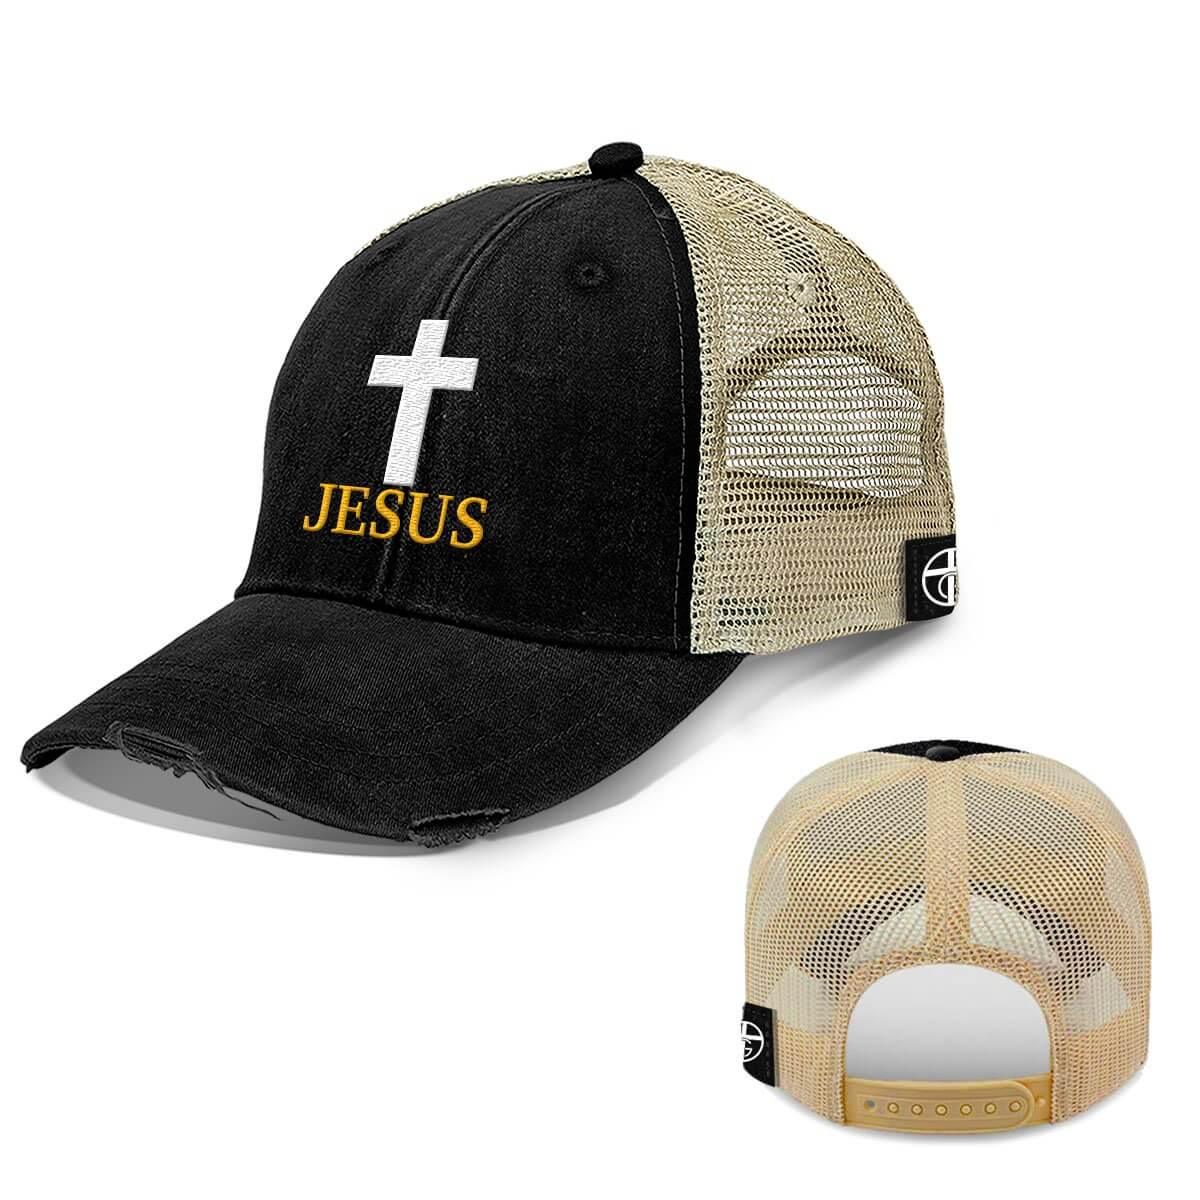 Jesus Cross Trucker Hats